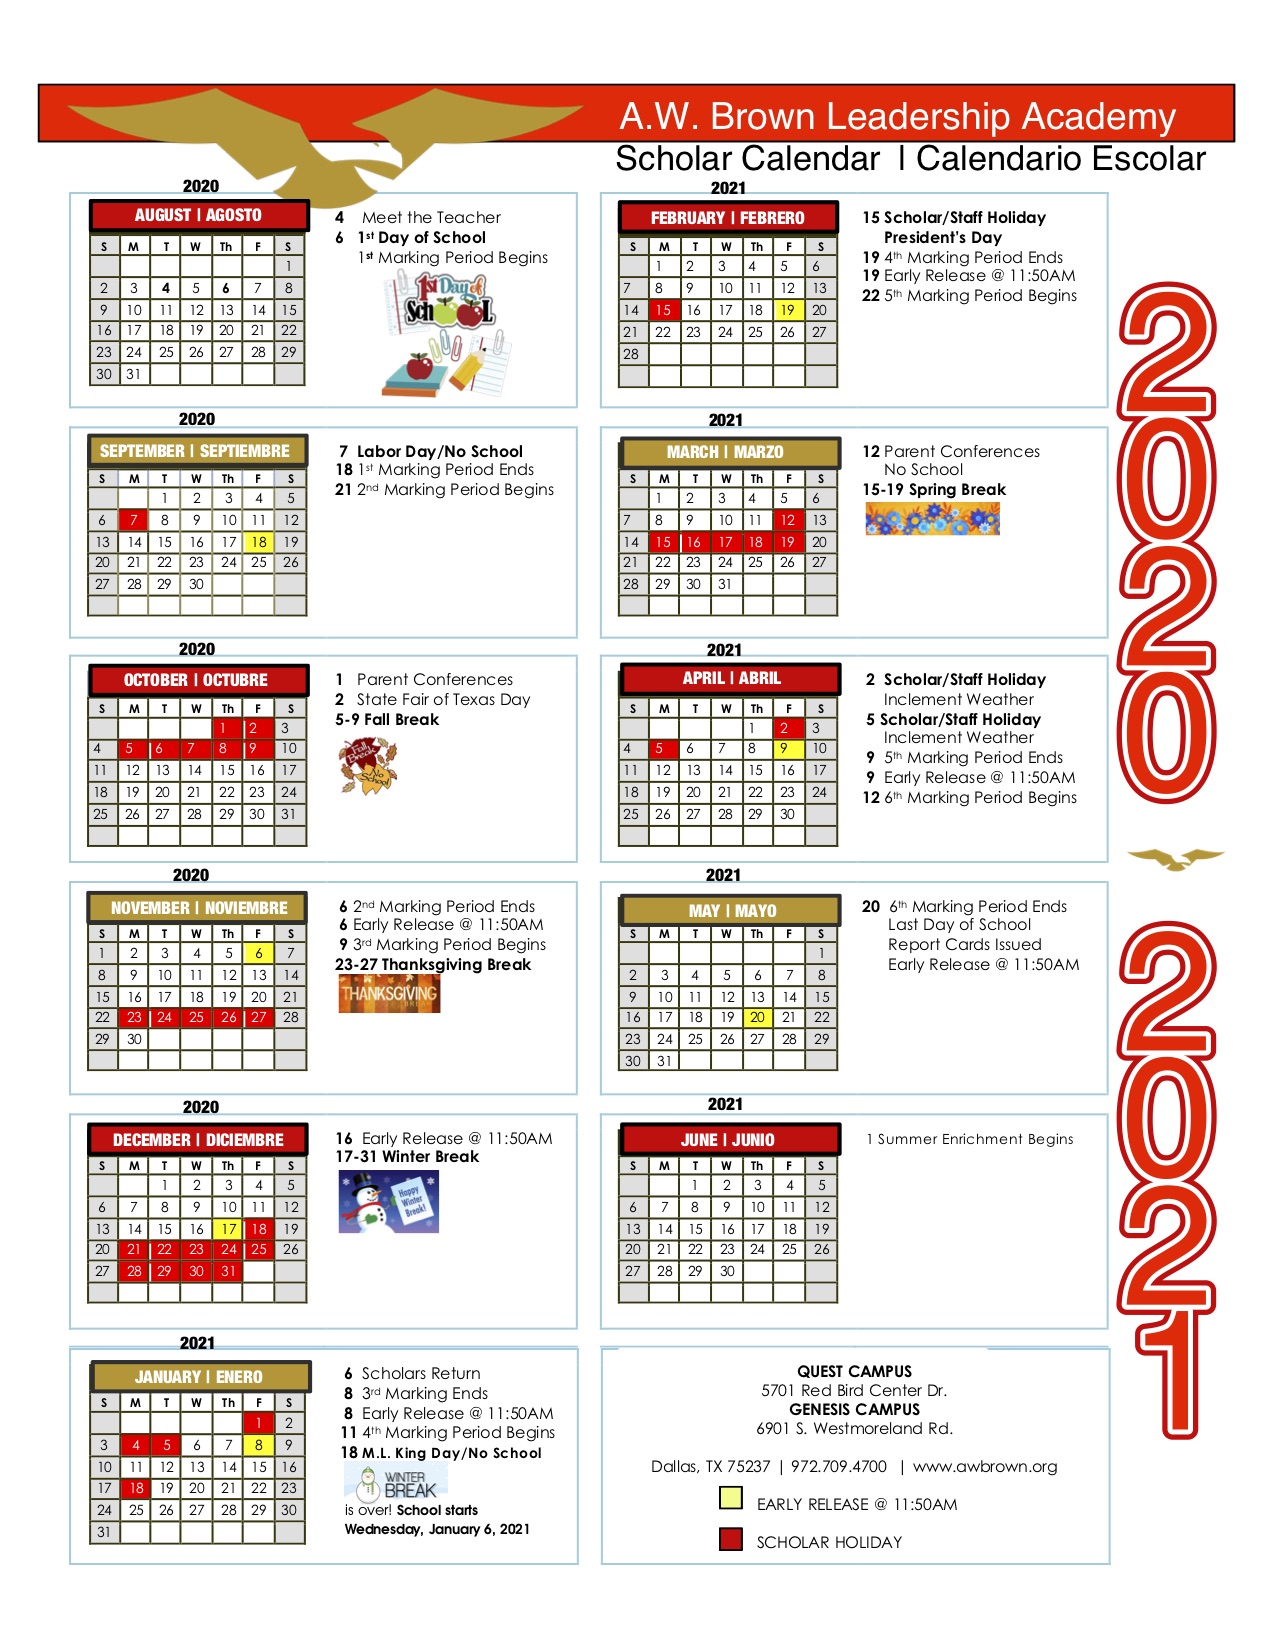 2020-2021 Scholar Calendar